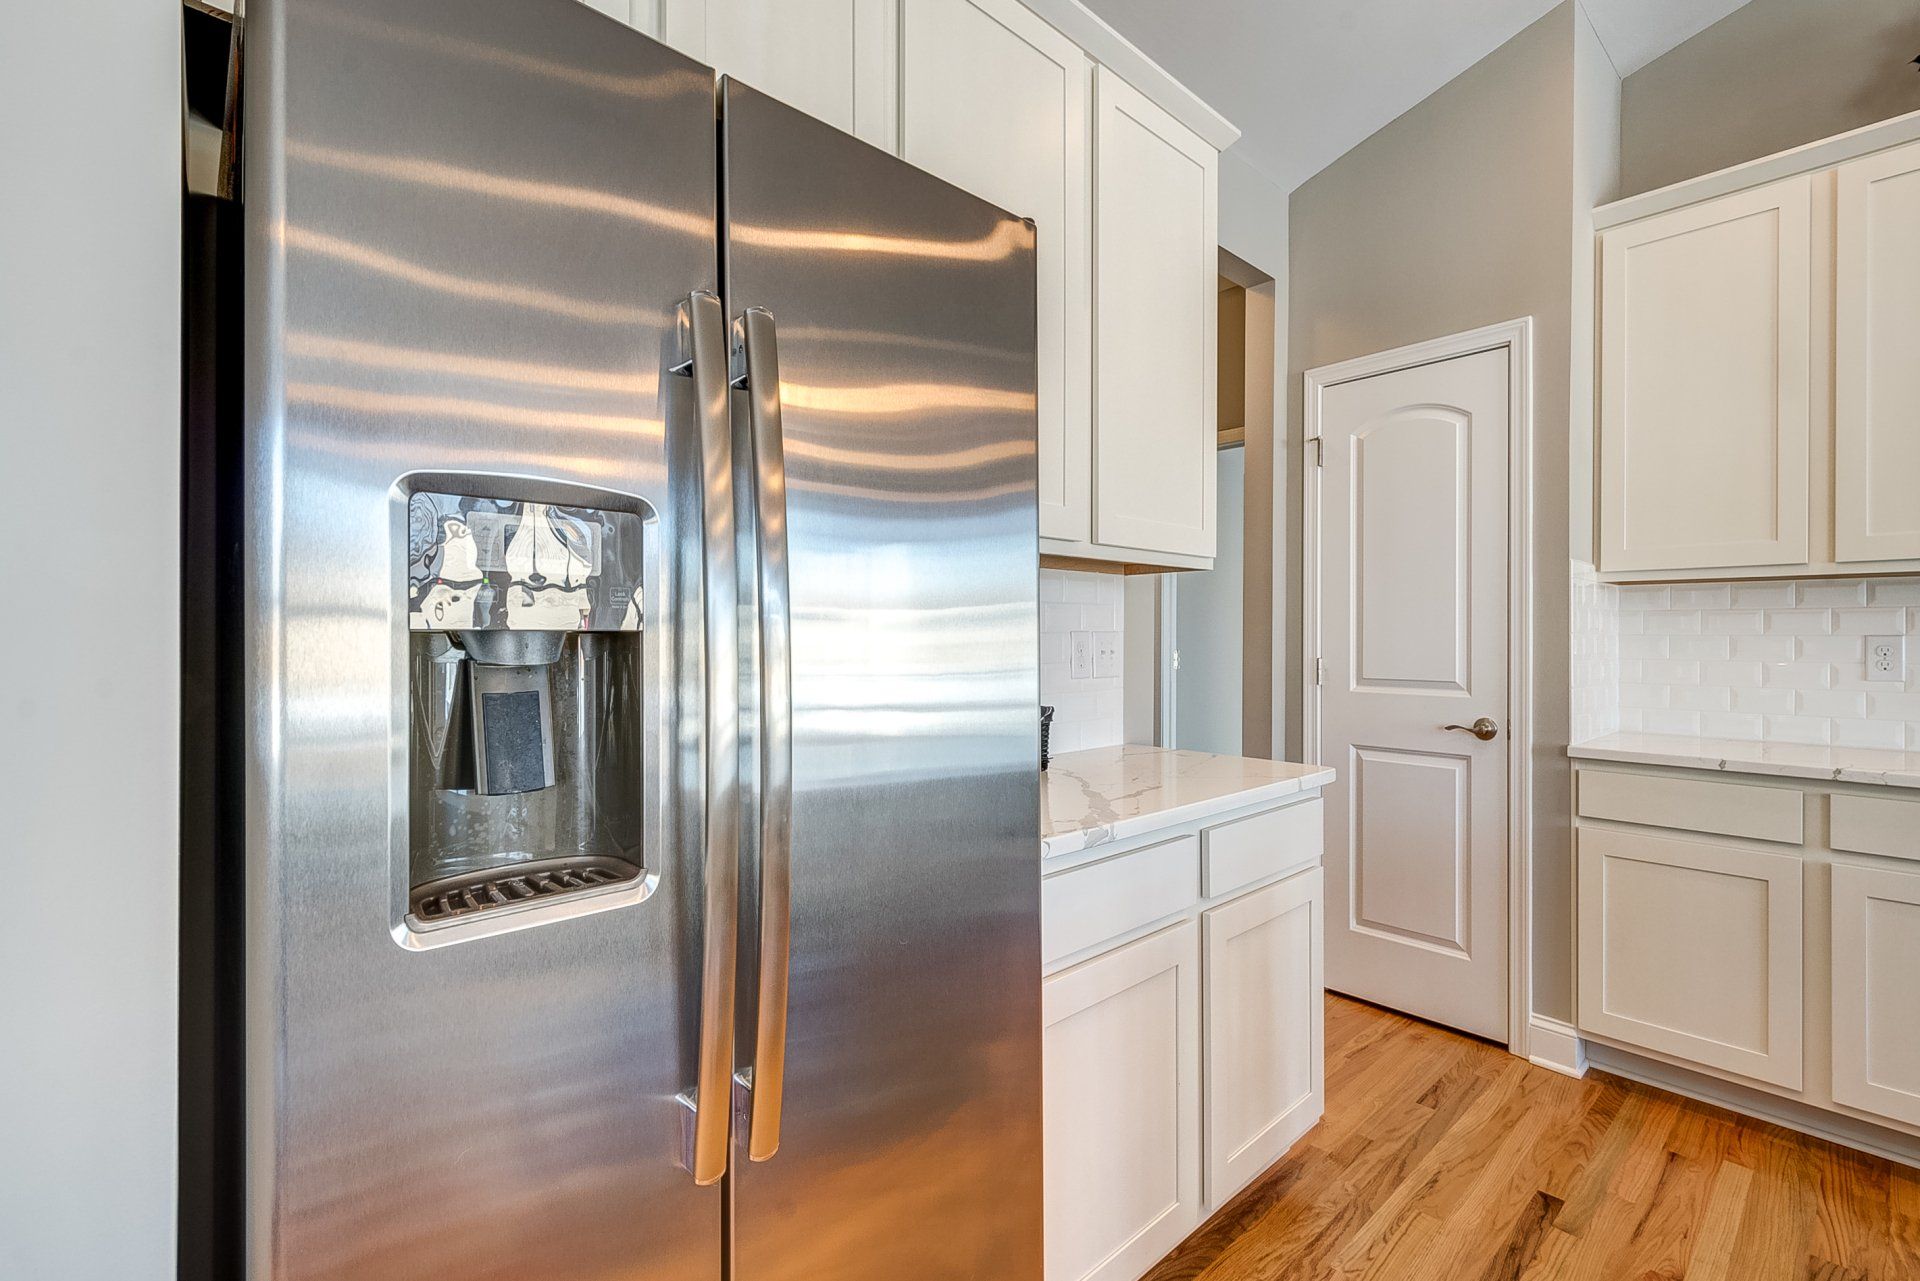 Metallic fridge in a kitchen